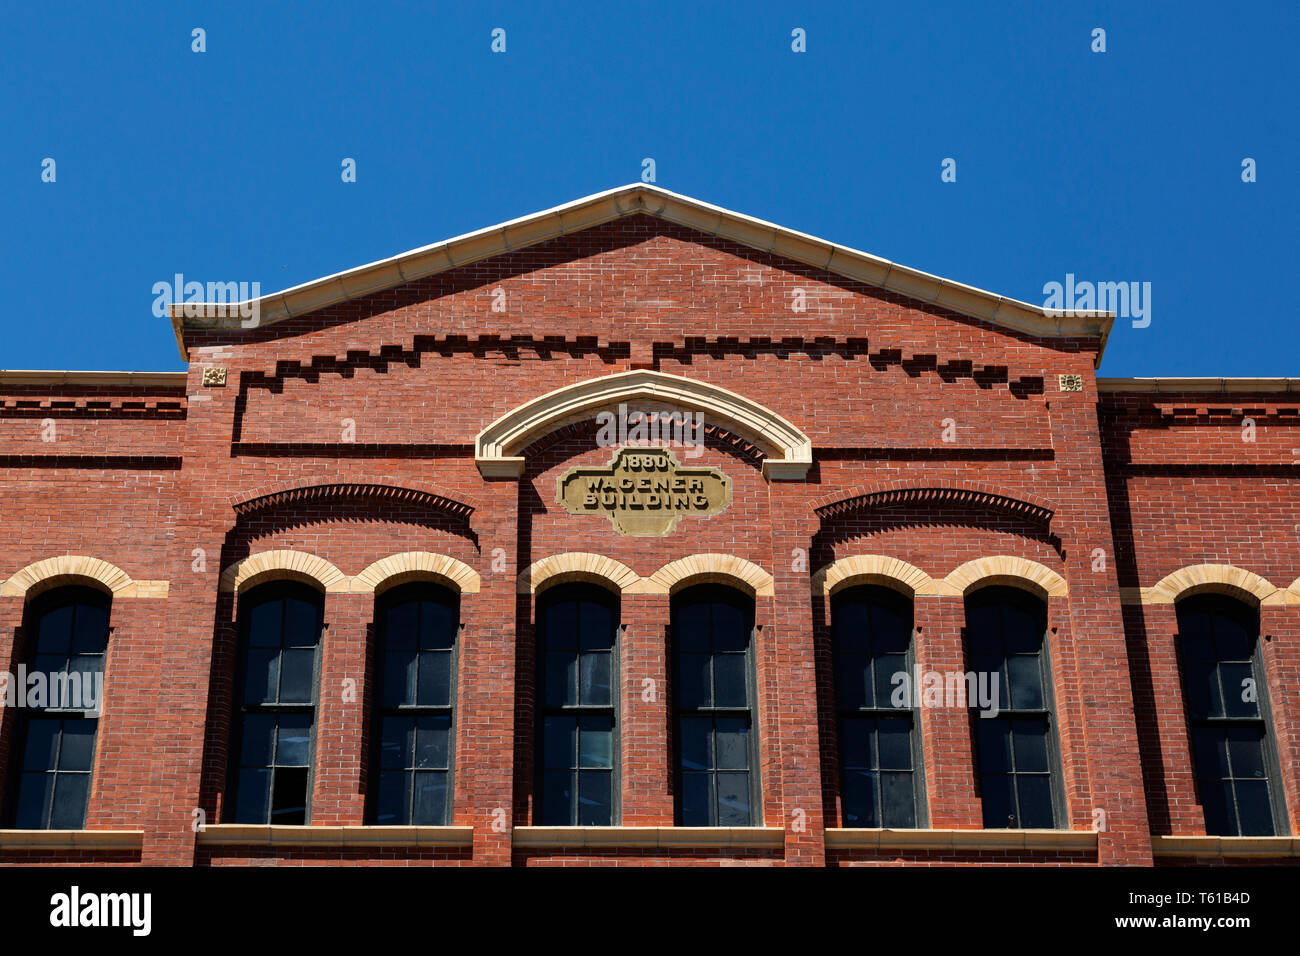 The Wagener Building in Charleston, South Carolina, USA. The building has a brickwork facade. Stock Photo